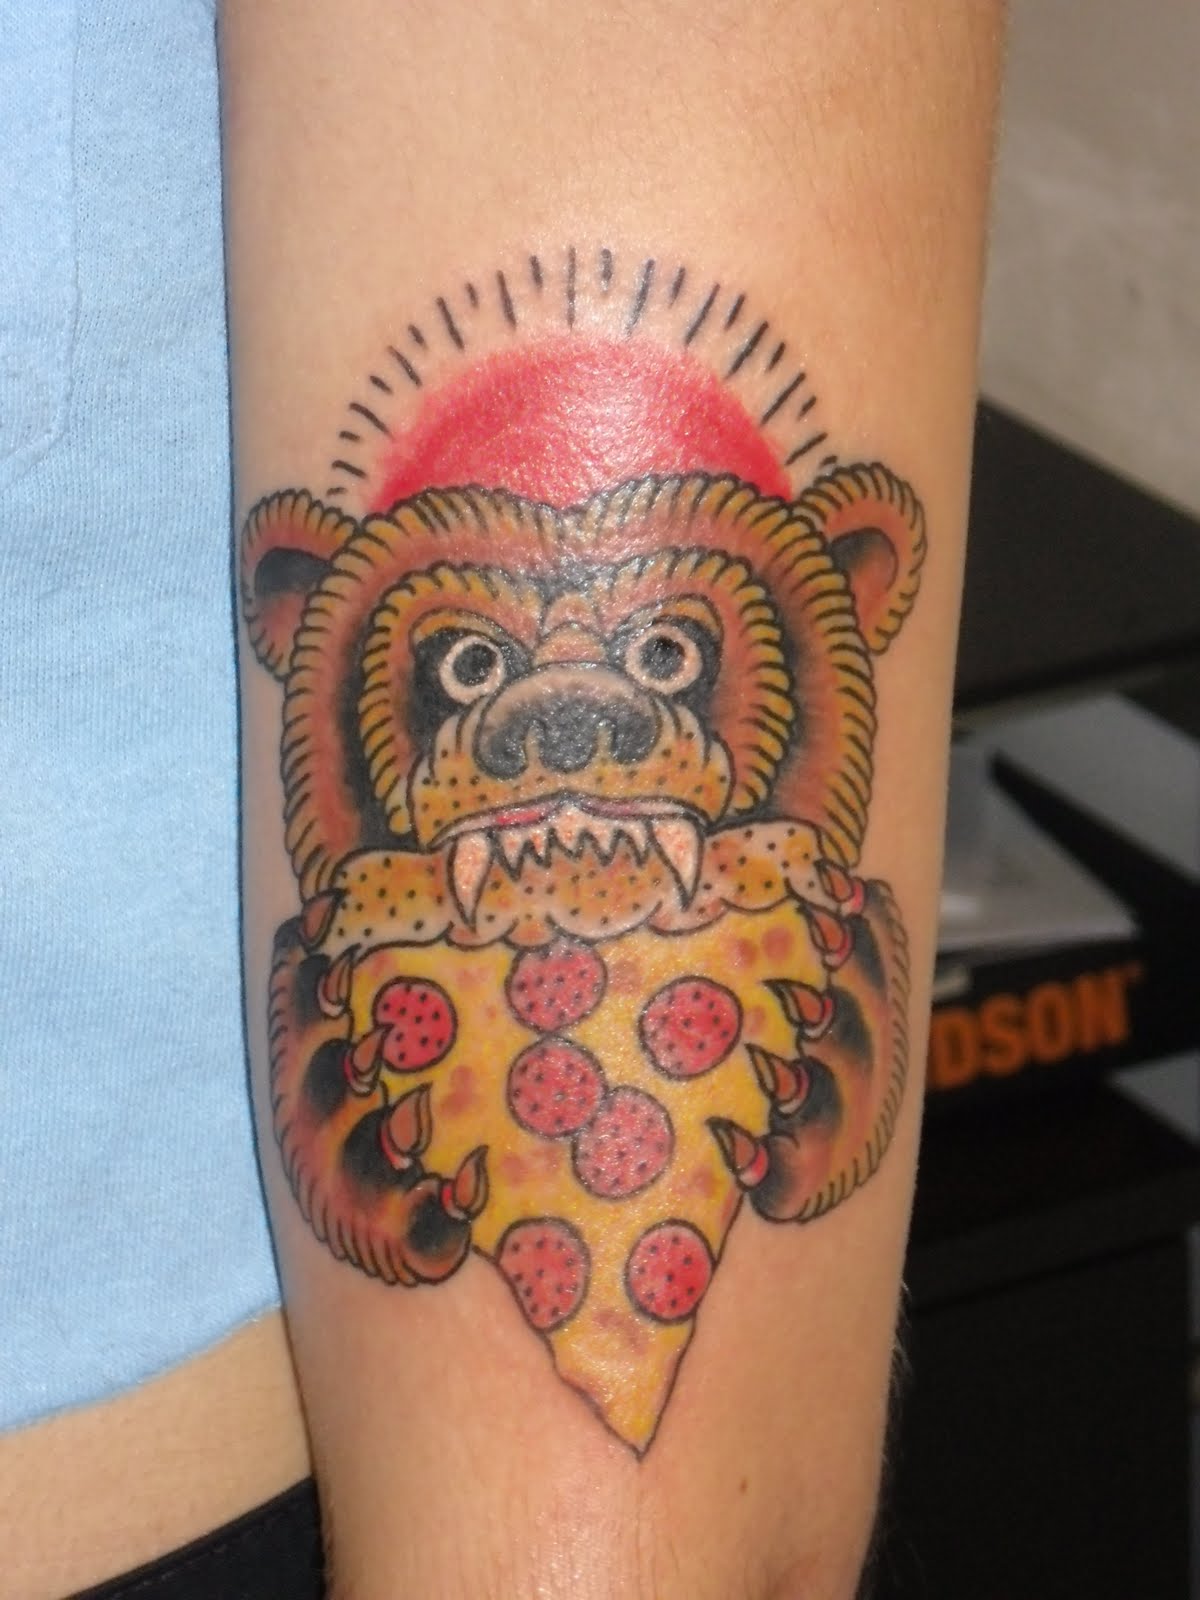 Bear Eating Pizza Tattoo.